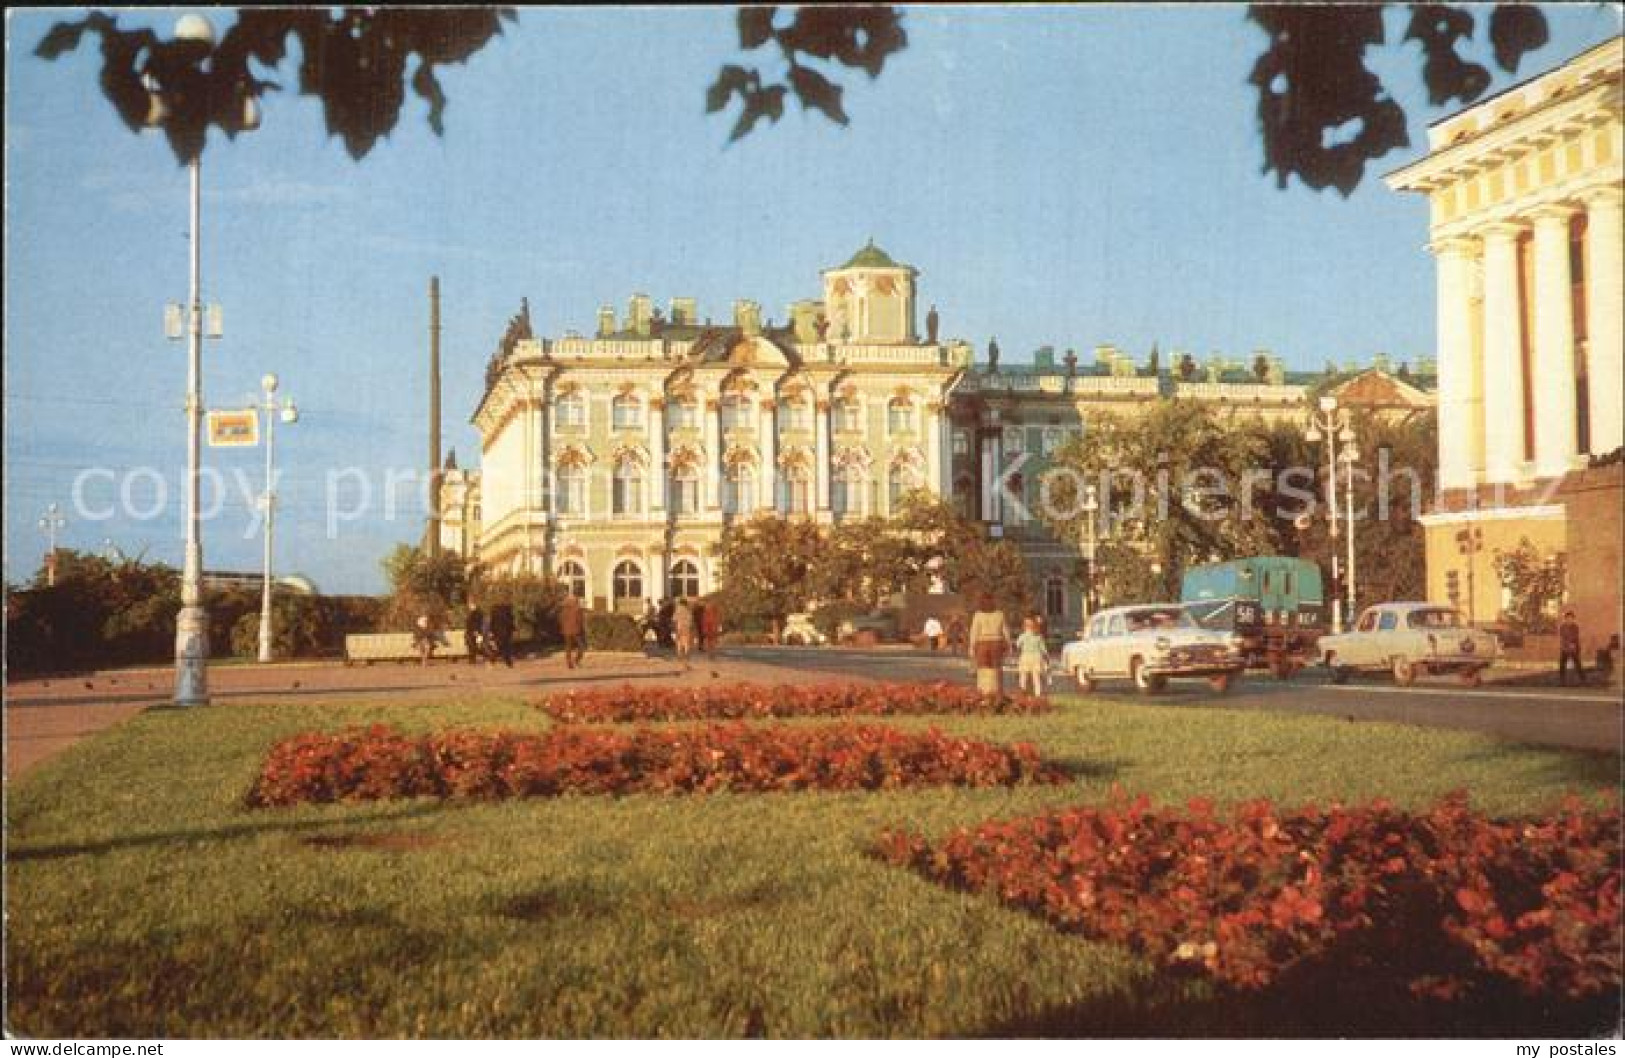 72522820 St Petersburg Leningrad Winter Palace   - Russia